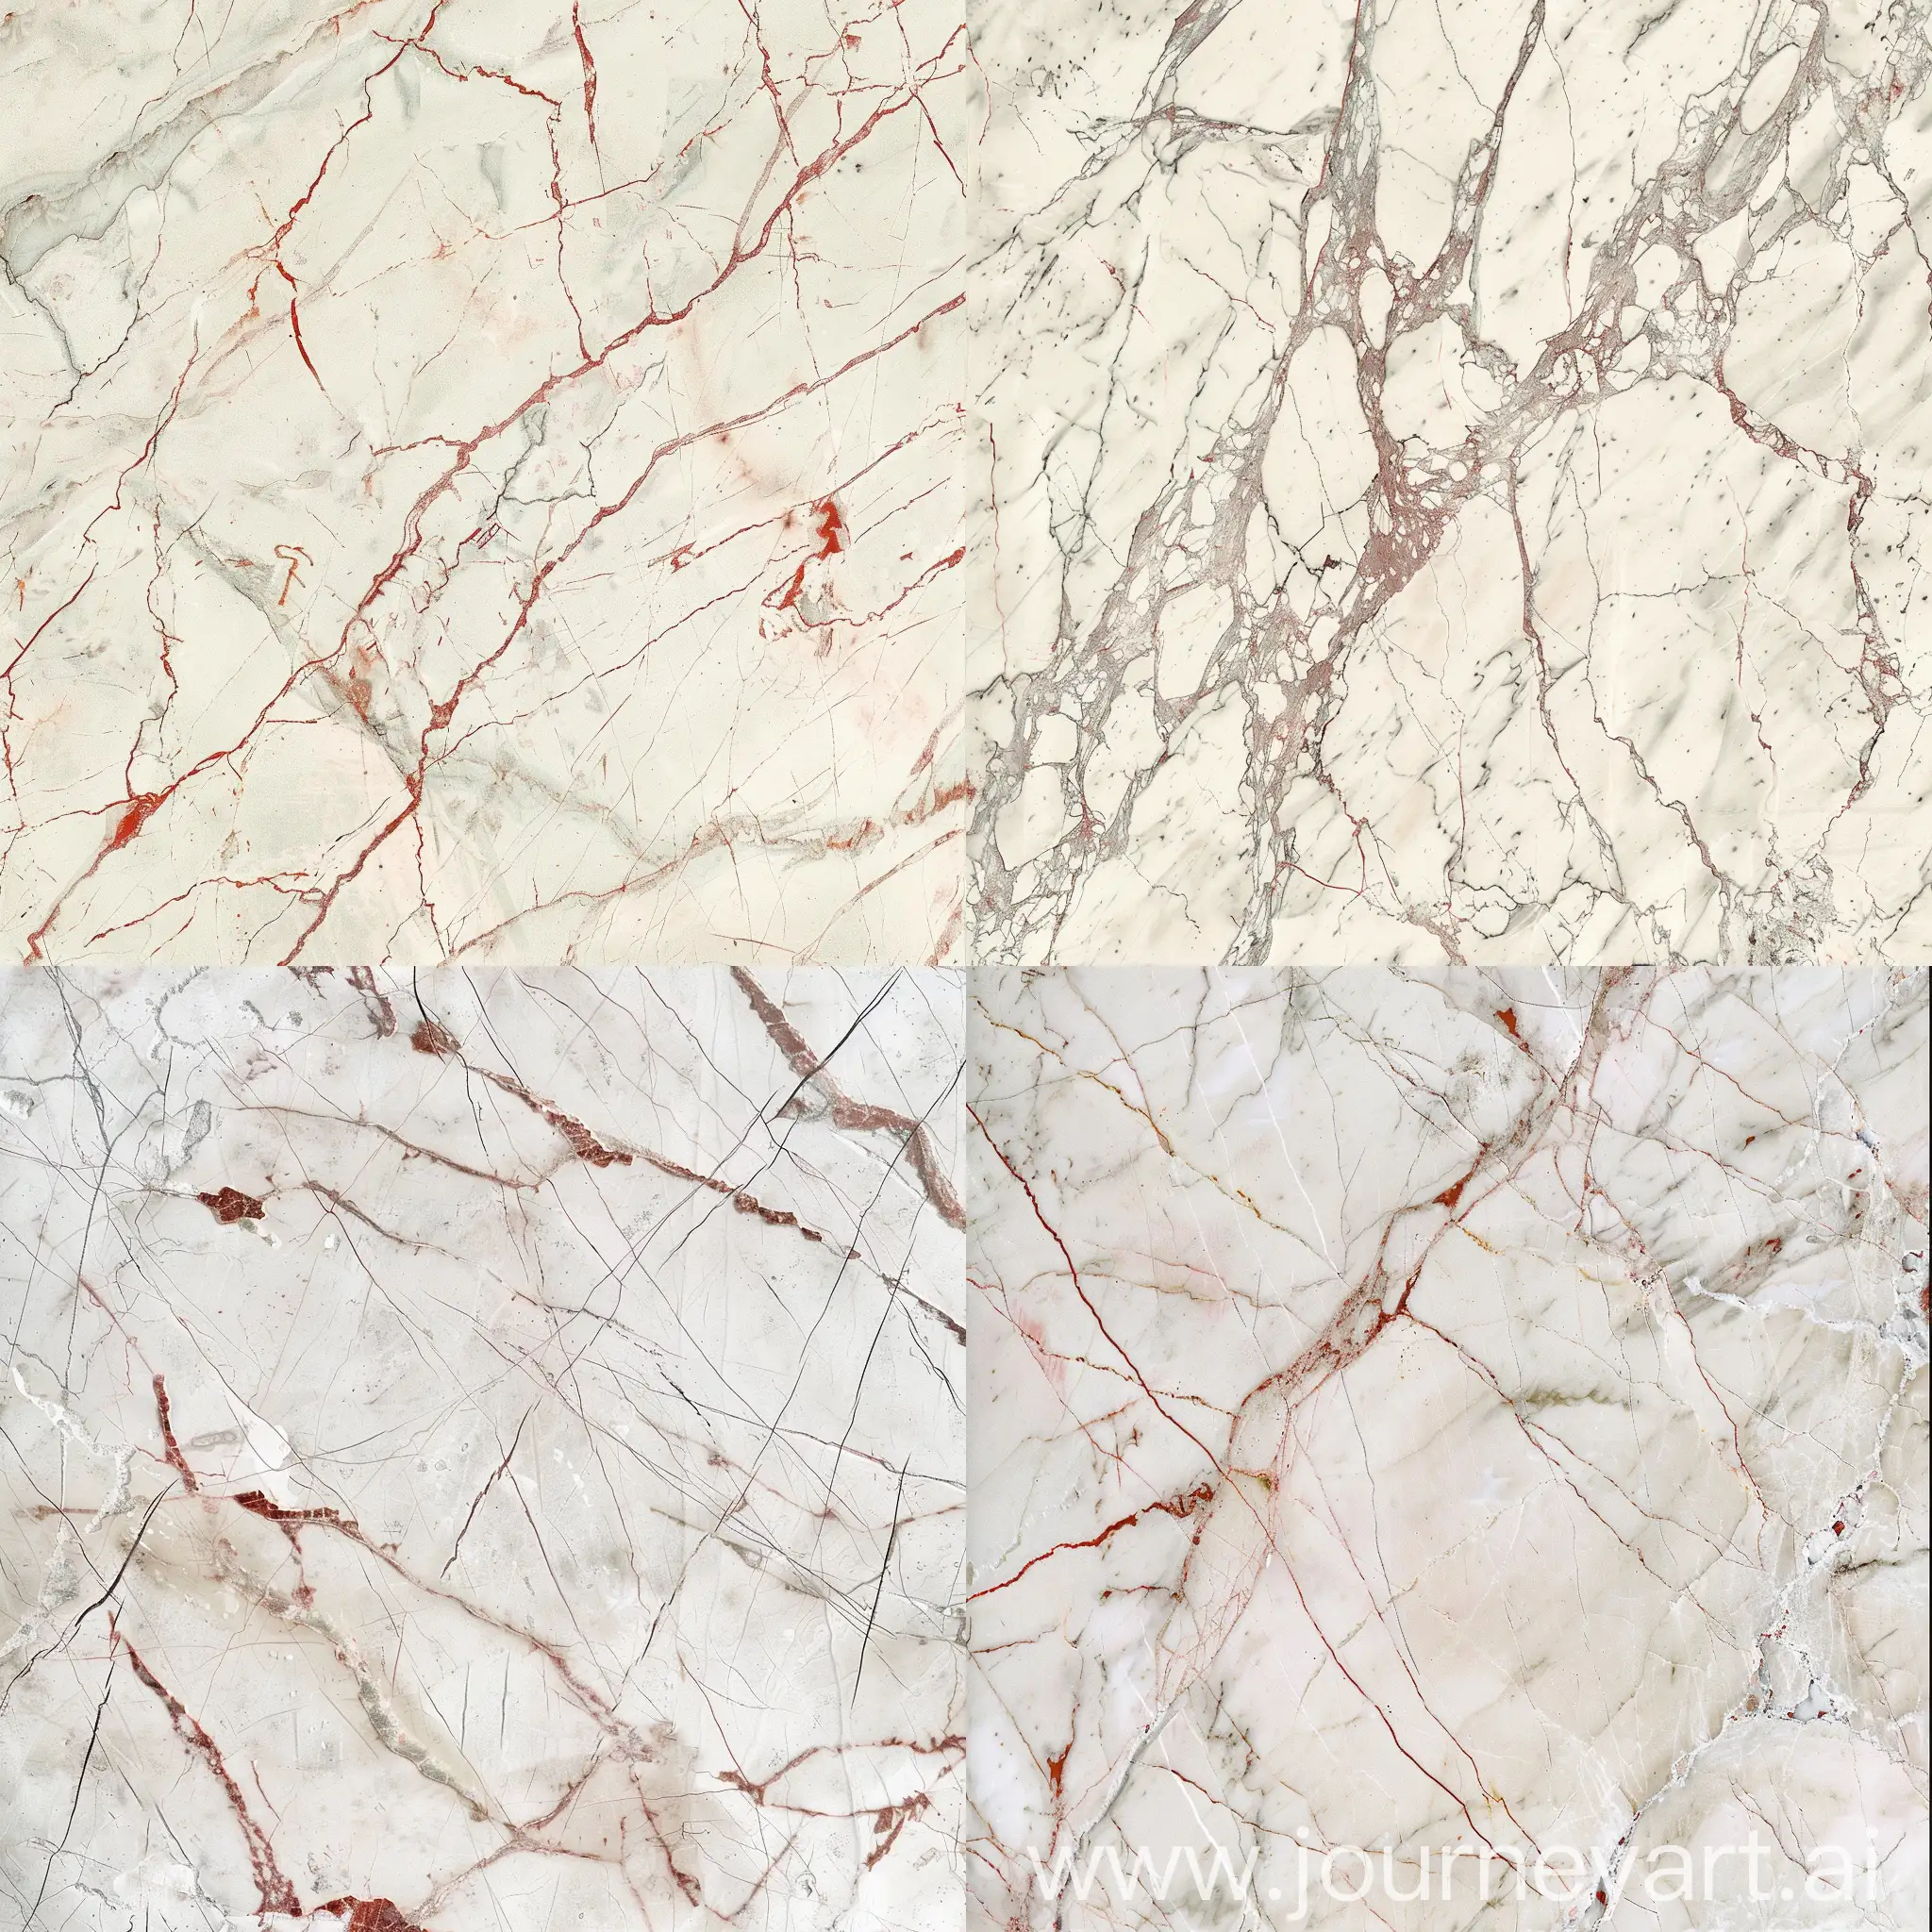 Elegant-White-Marble-with-Subtle-Red-Veins-Detailed-8K-Artwork